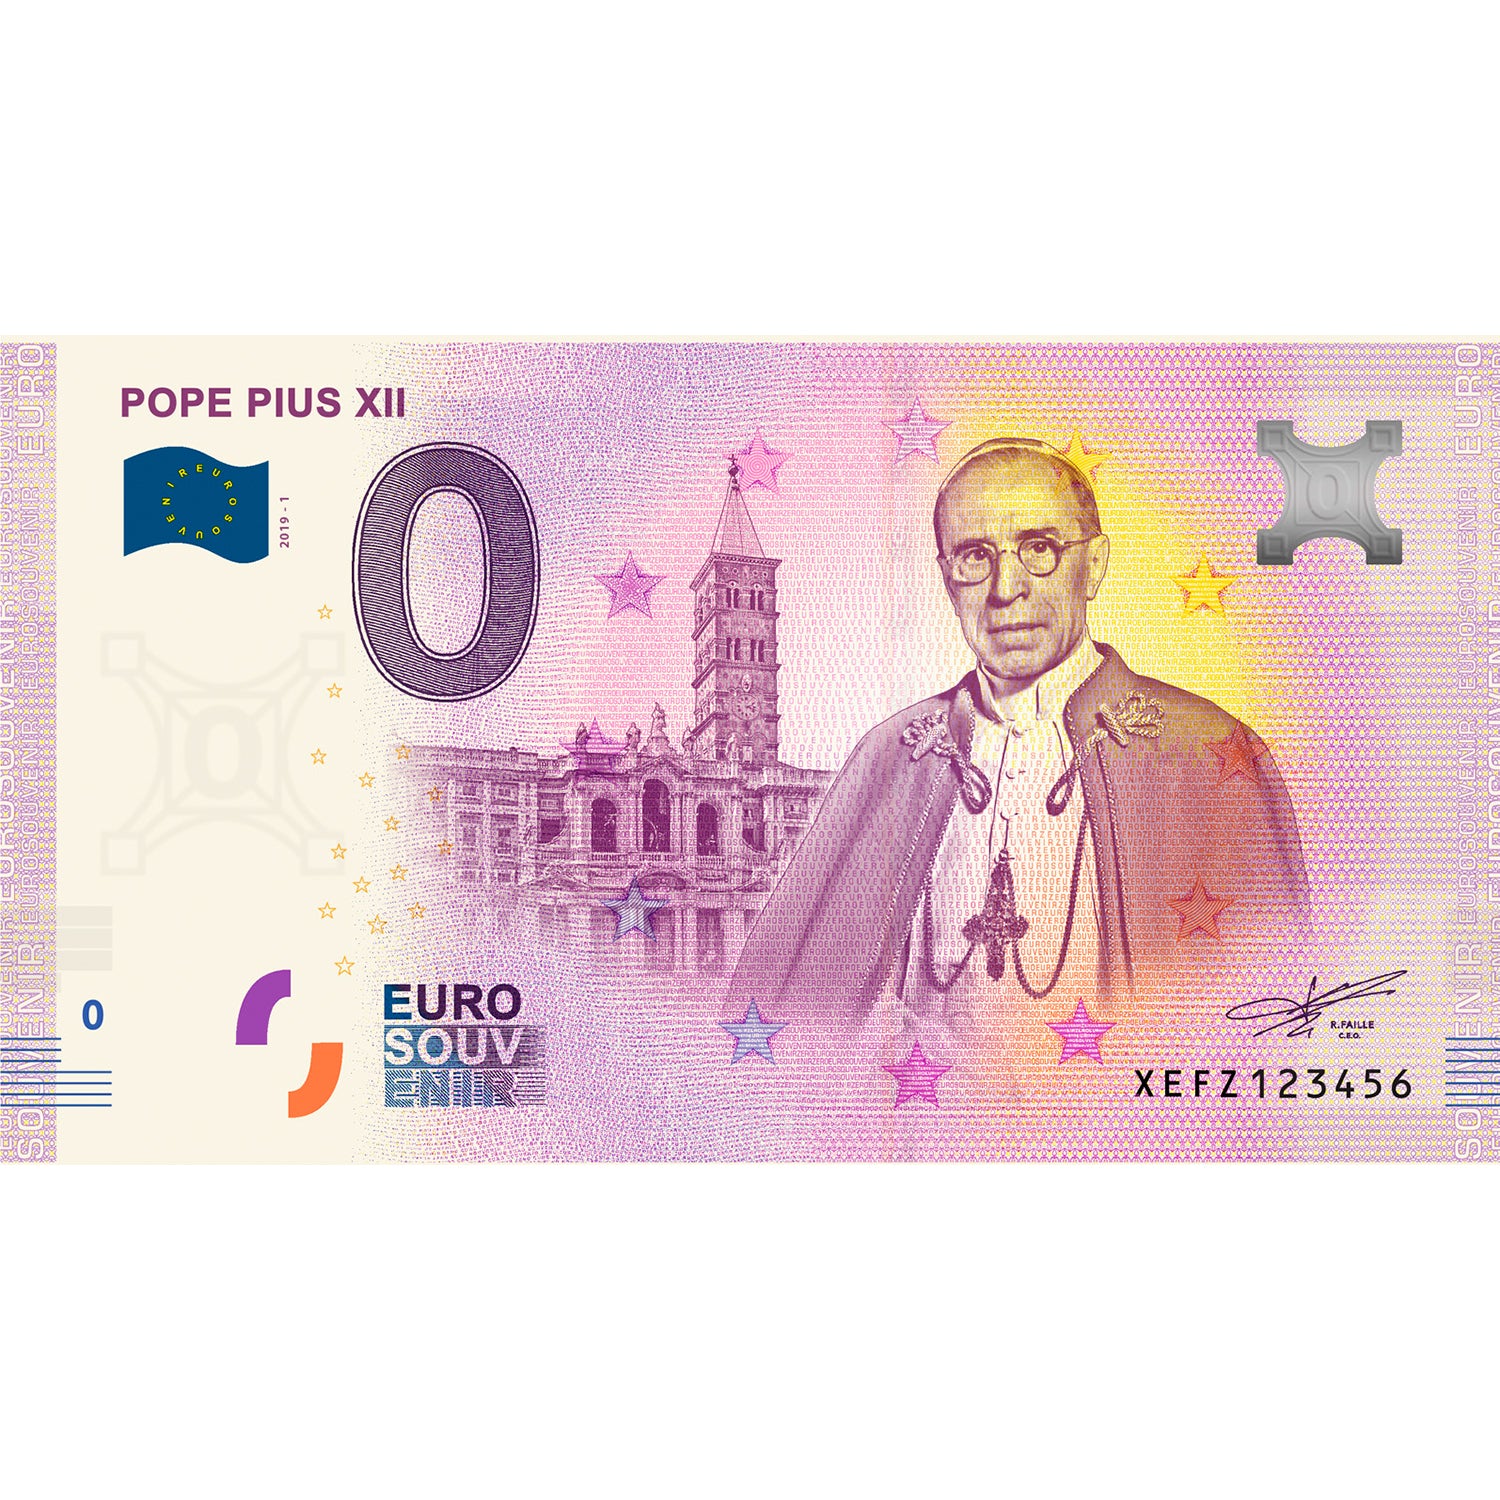 0 Euro Souvenir Note Pope Pius XII